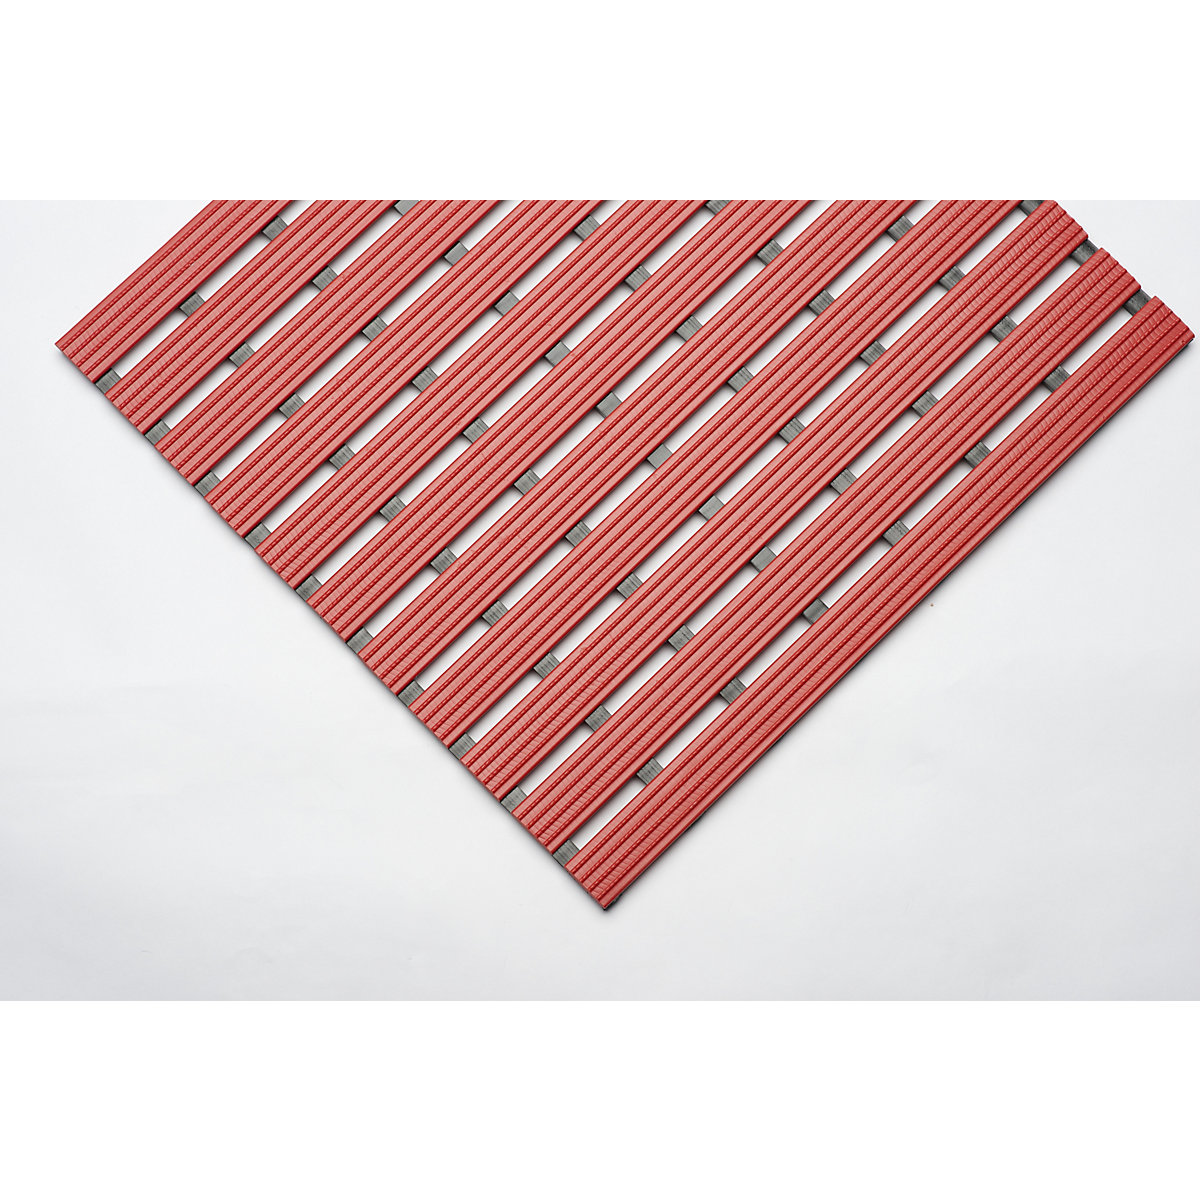 Kunststof mat, per str. mtr., loopvlak van harde kunststof, antislip, breedte 600 mm, rood-9